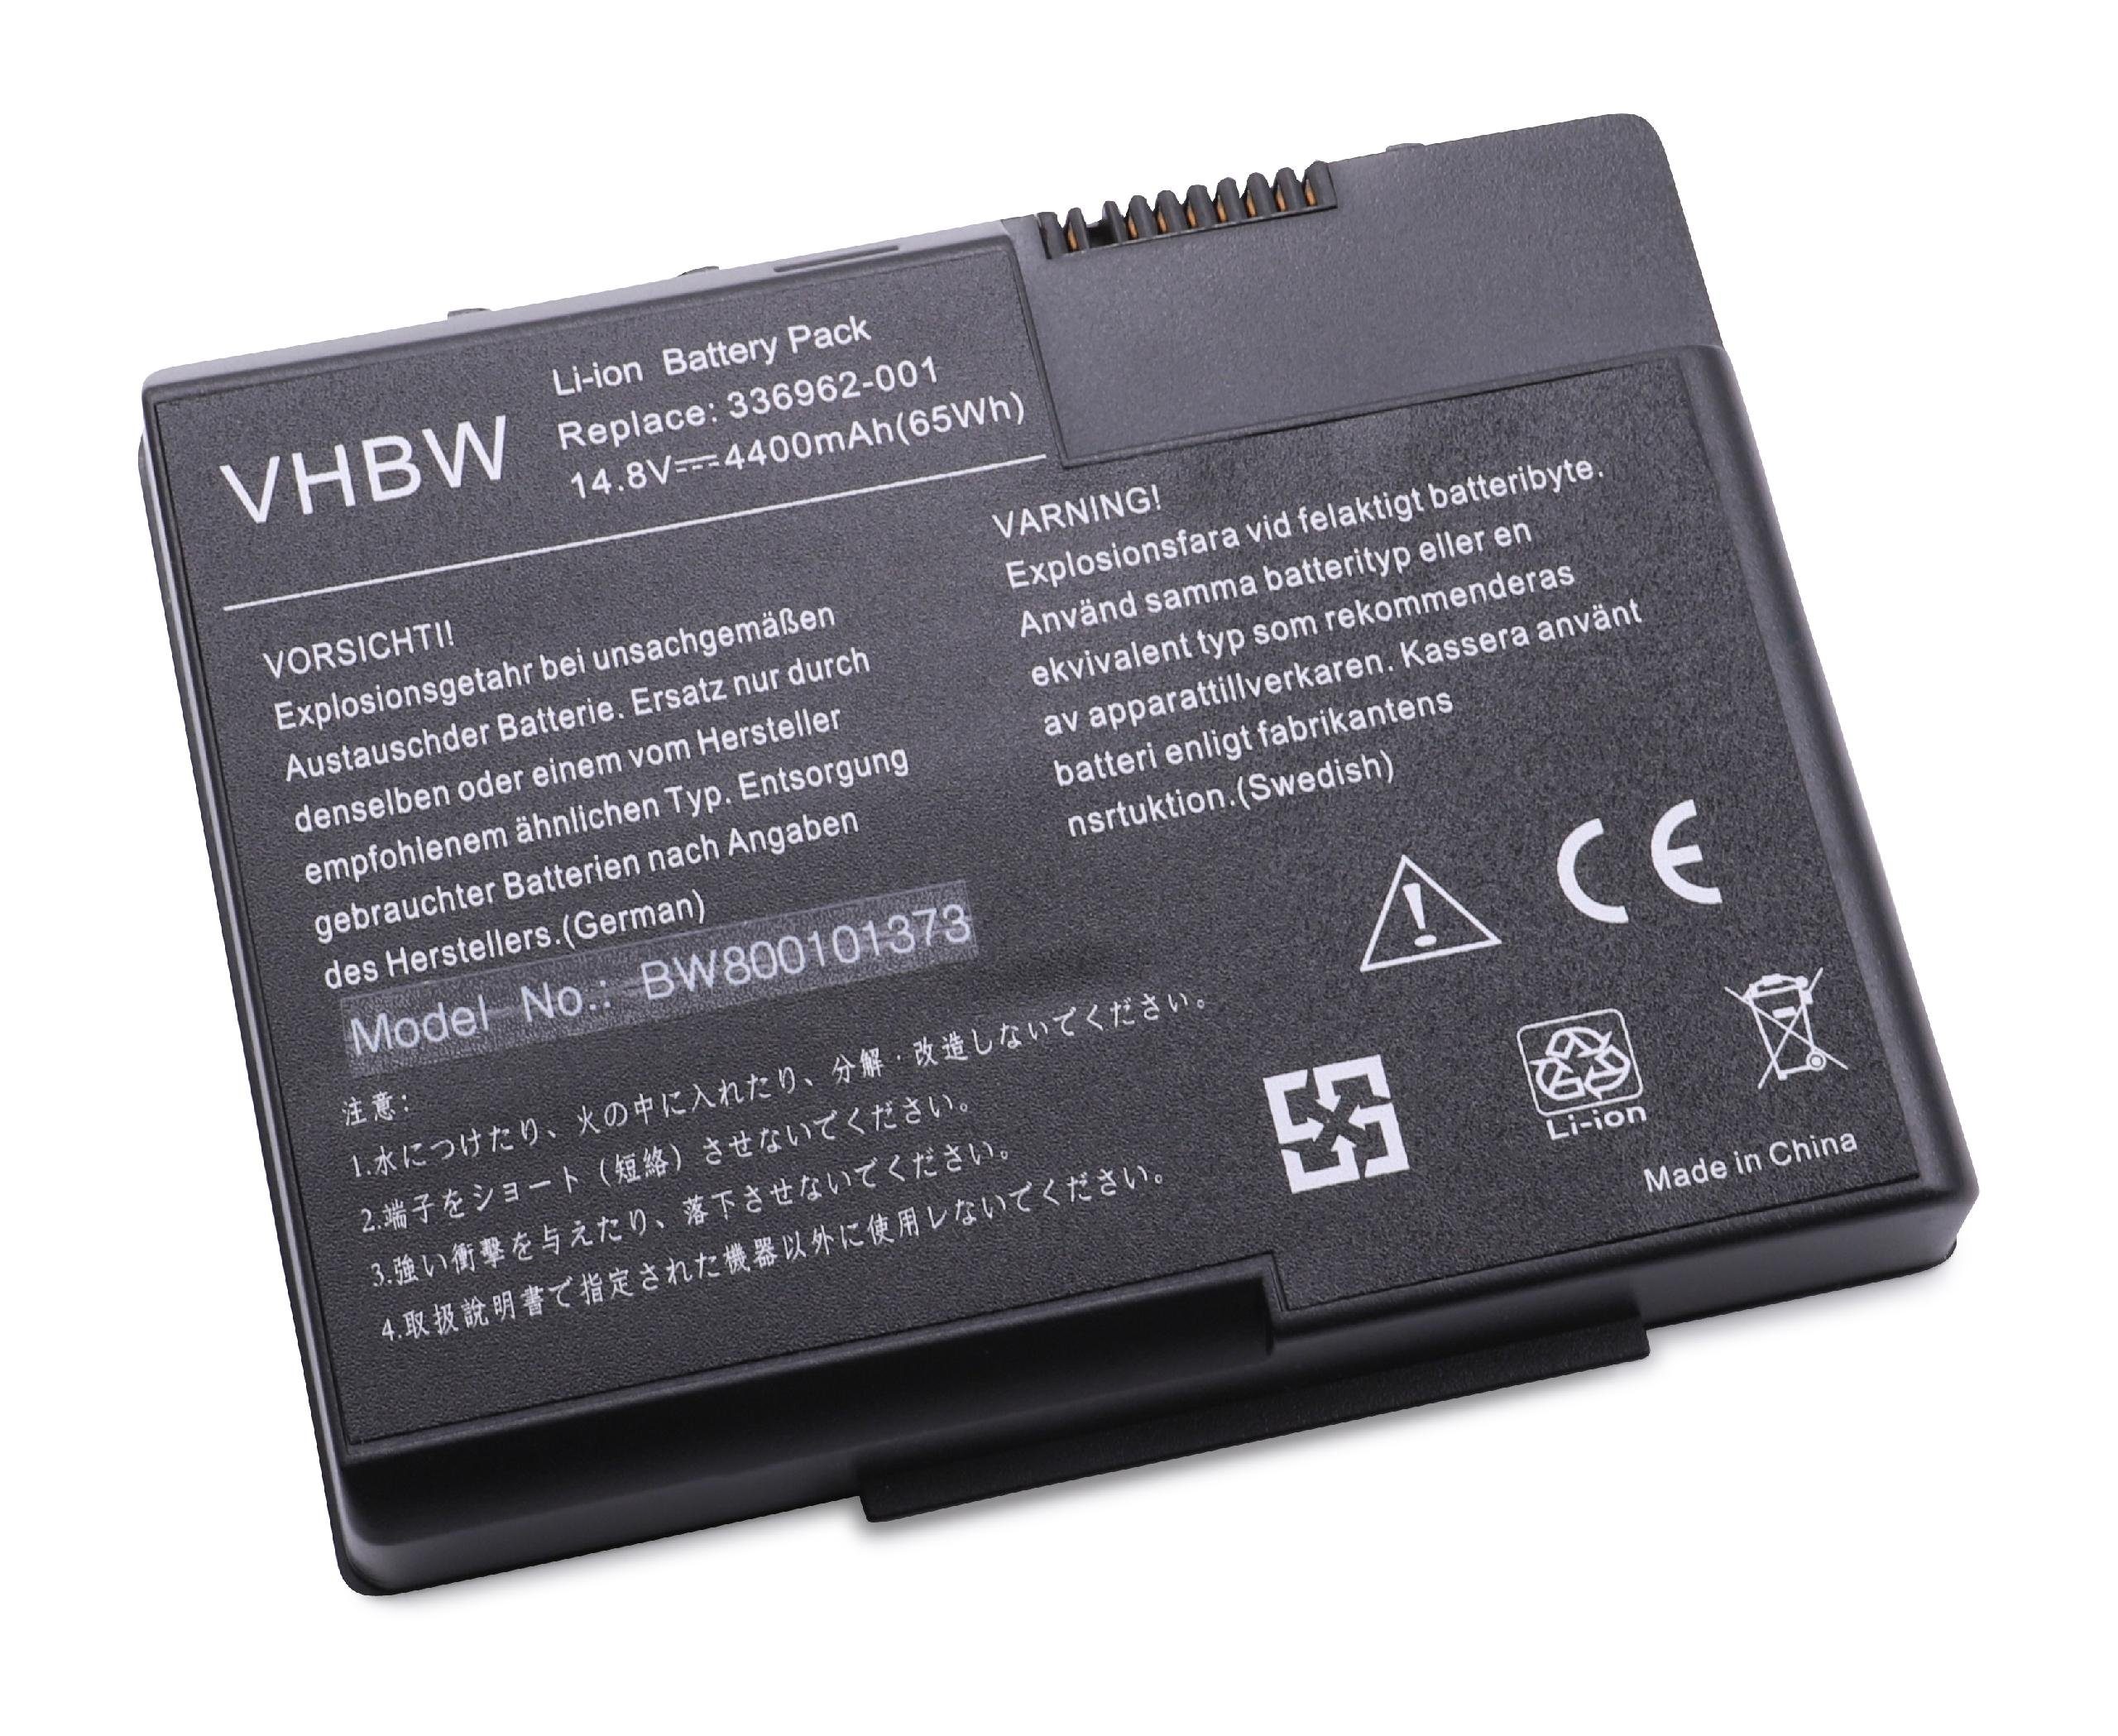 vhbw passend für HP Pavilion zt3400, zt3400 (CTO) (PH181AV), zt3400 (CTO) Laptop-Akku 4400 mAh